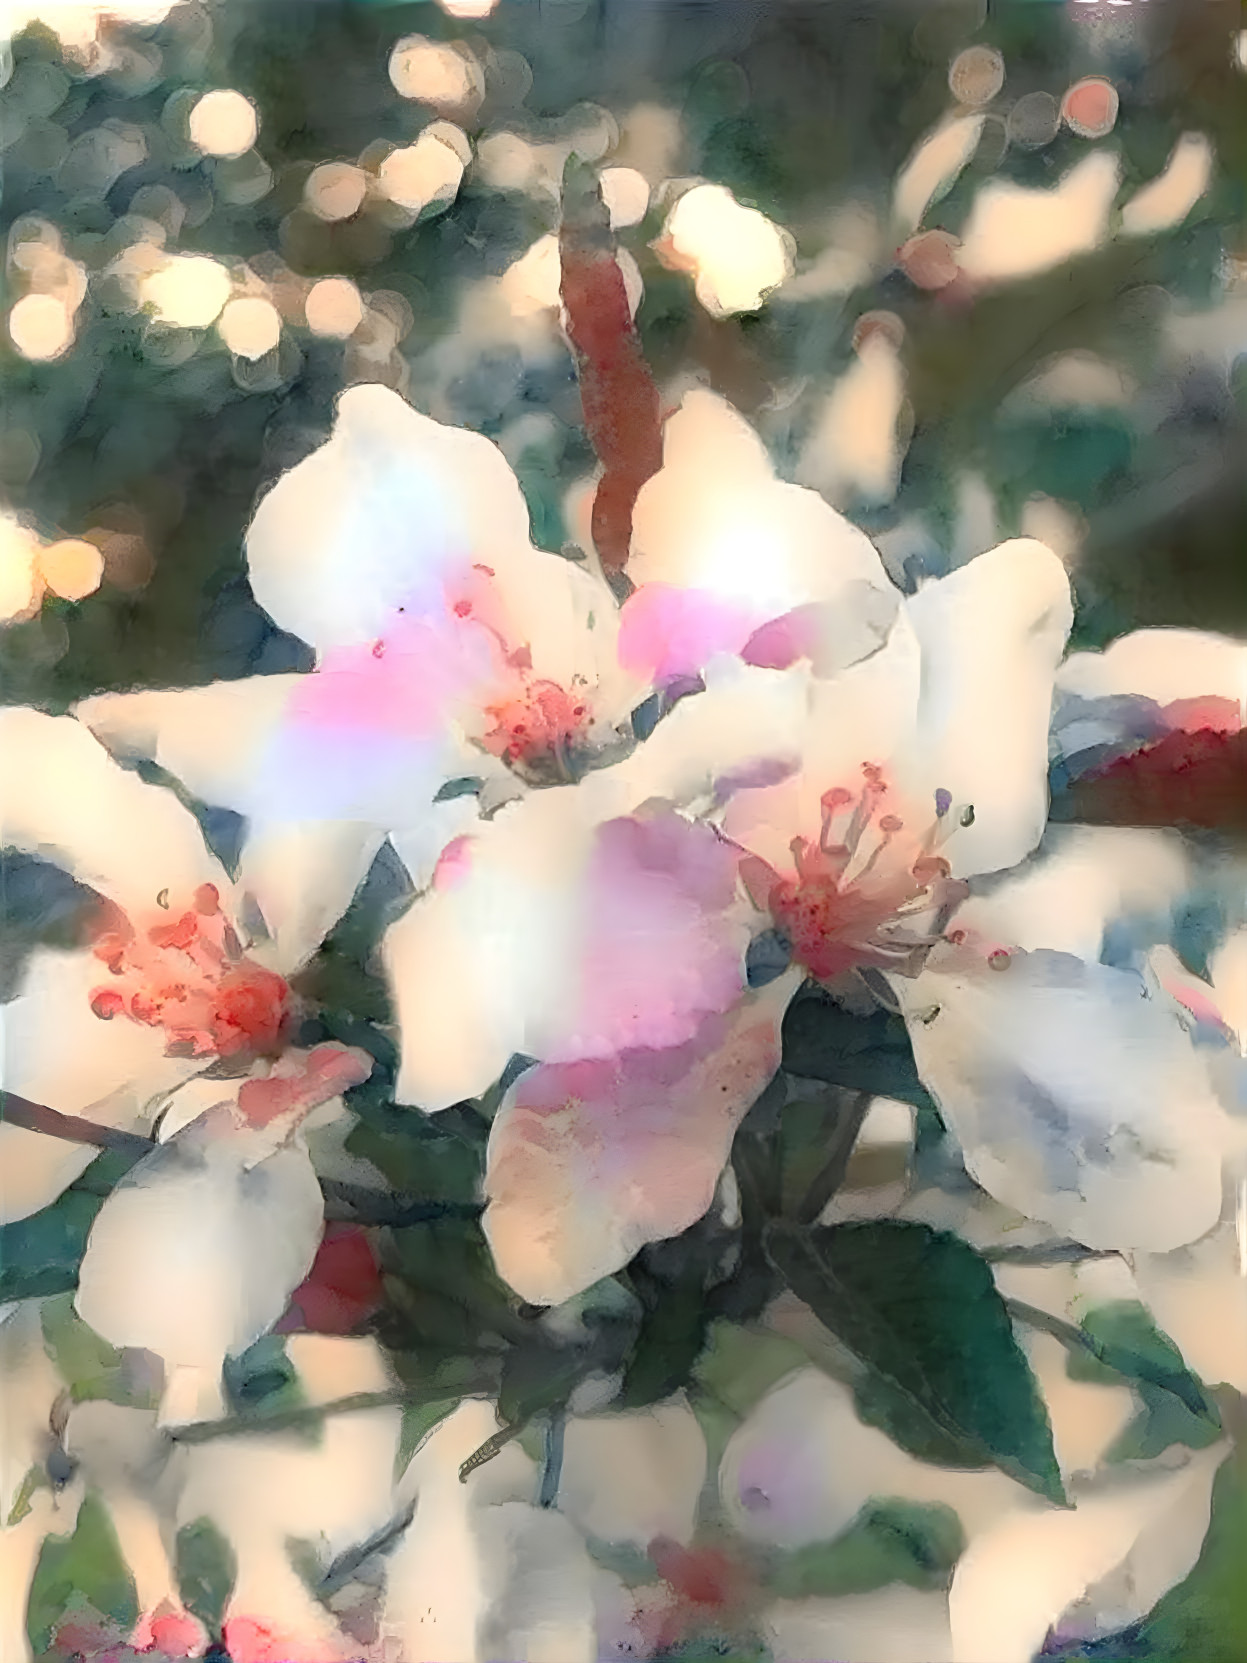 Apple blossom time